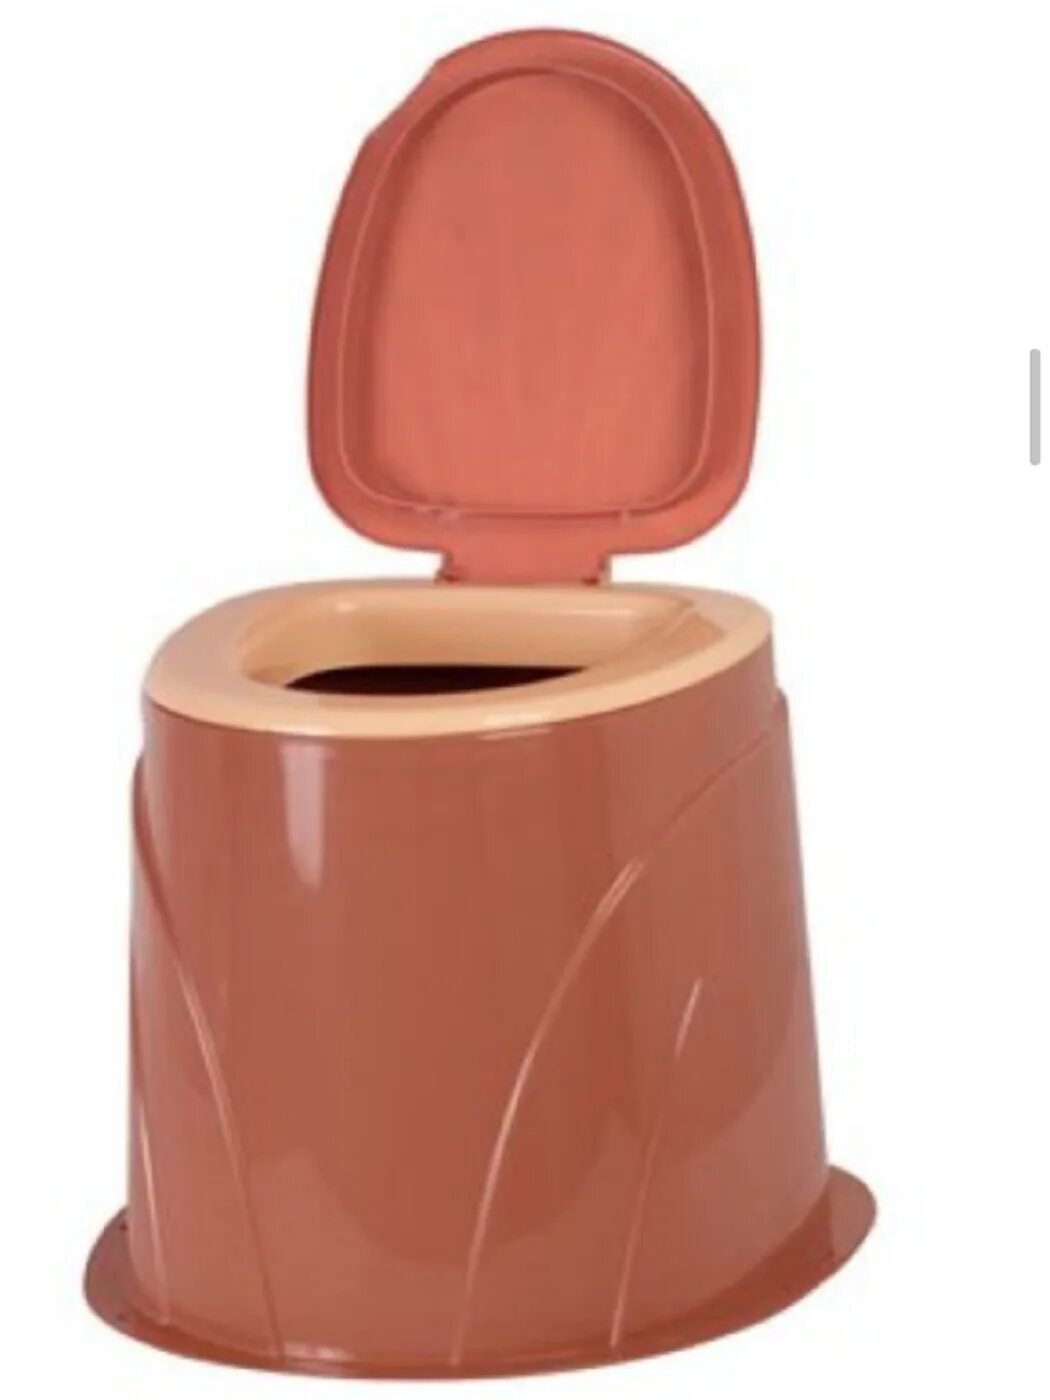 Купить туалет тула. Ведро-туалет 16л 49459. Унитаз" дачный "с сиденьем /./ [2000999705328]. Туалет 11005. Дачный туалет ар-пласт.